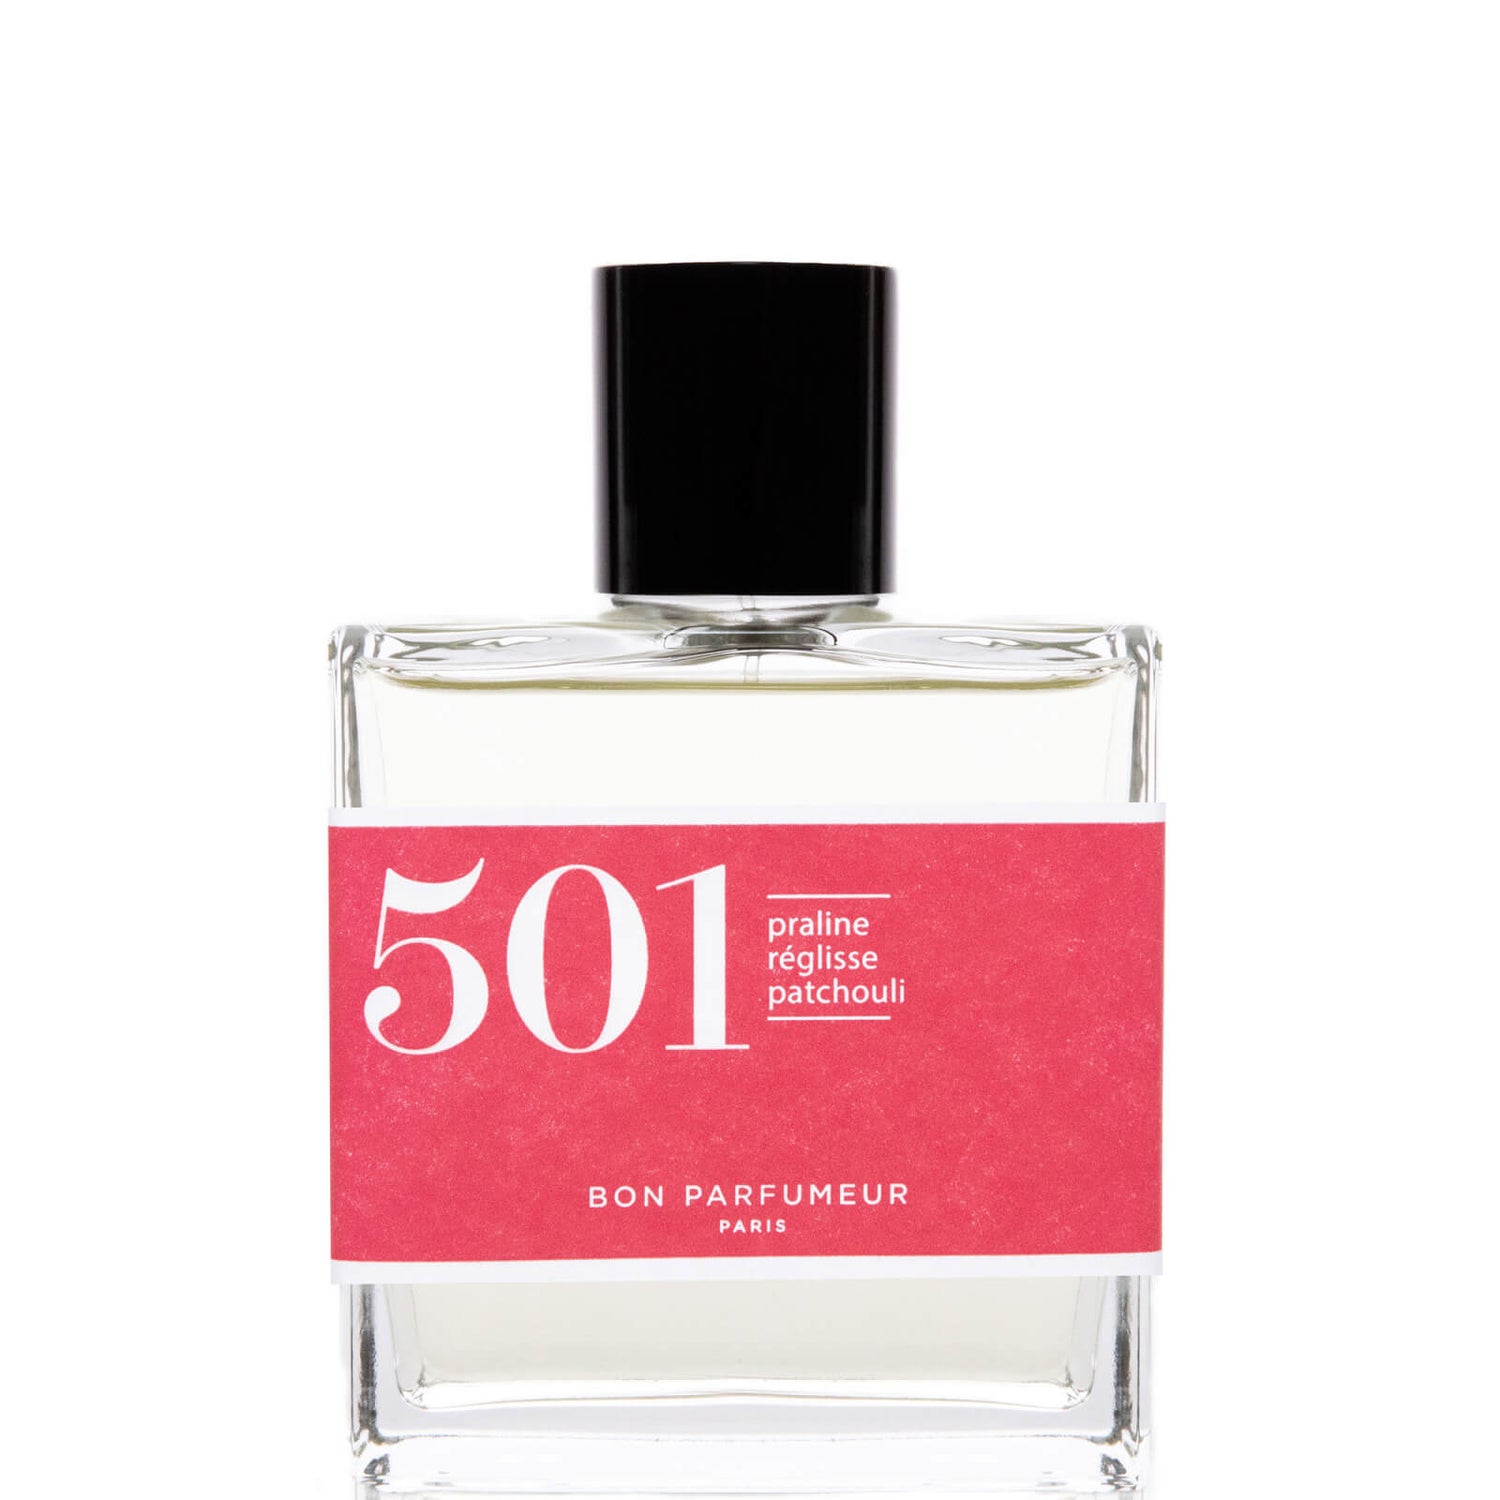 Bon Parfumeur 501 Praline Licorice Patchouli Apă de parfum - 100ml